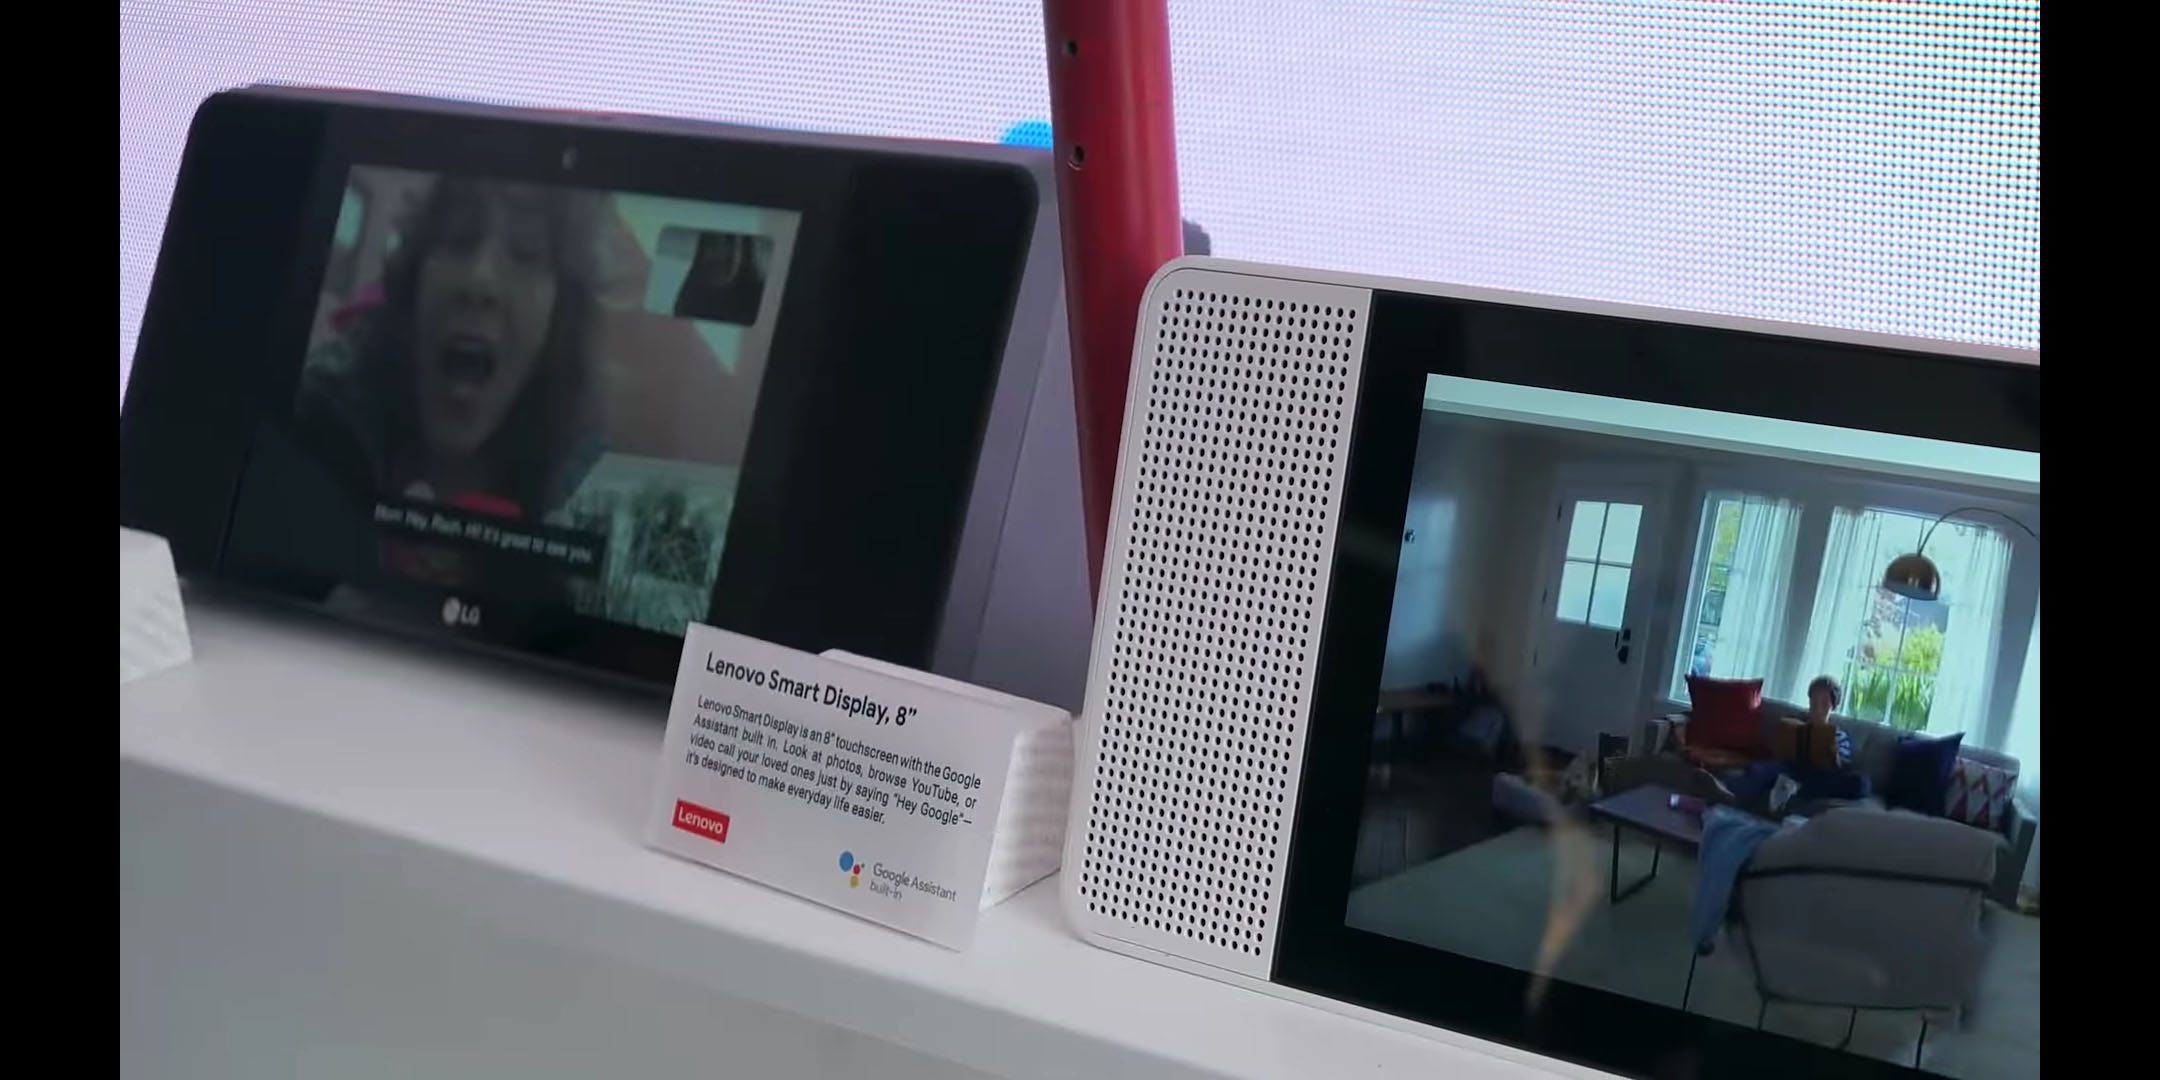 Google Lenovo Smart Display Android News All Bytes Ottawa Martin Canada